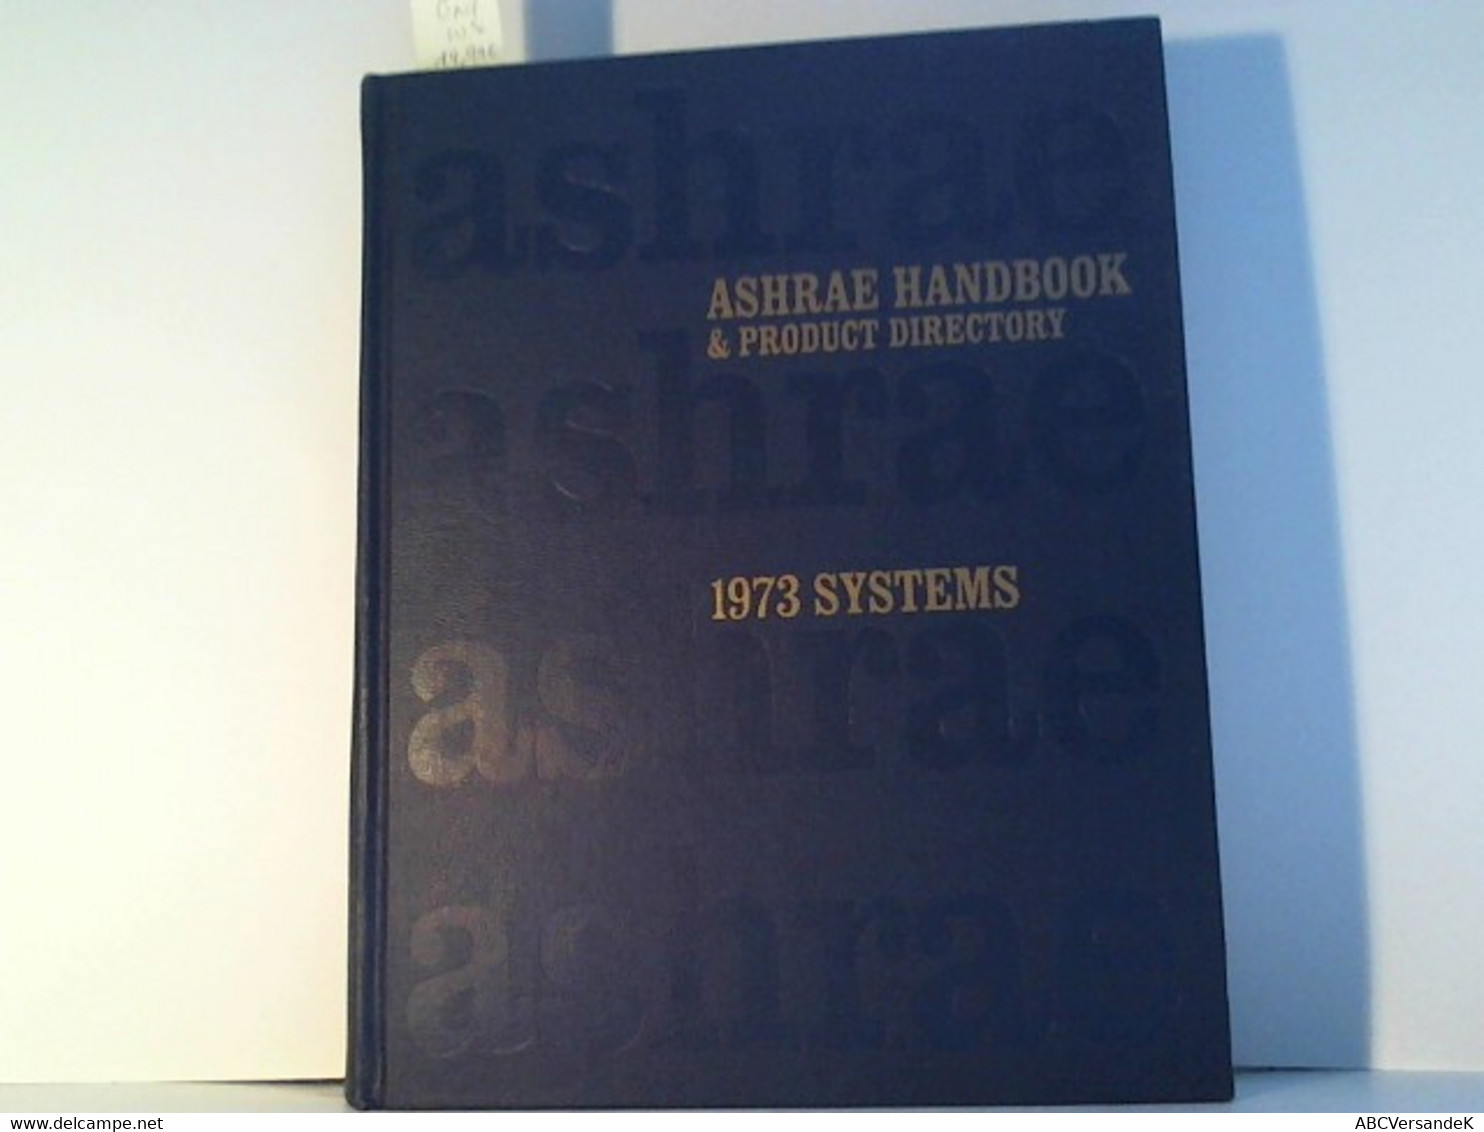 Ashrae Handbook& Product Directory 1973 Systems - Technical